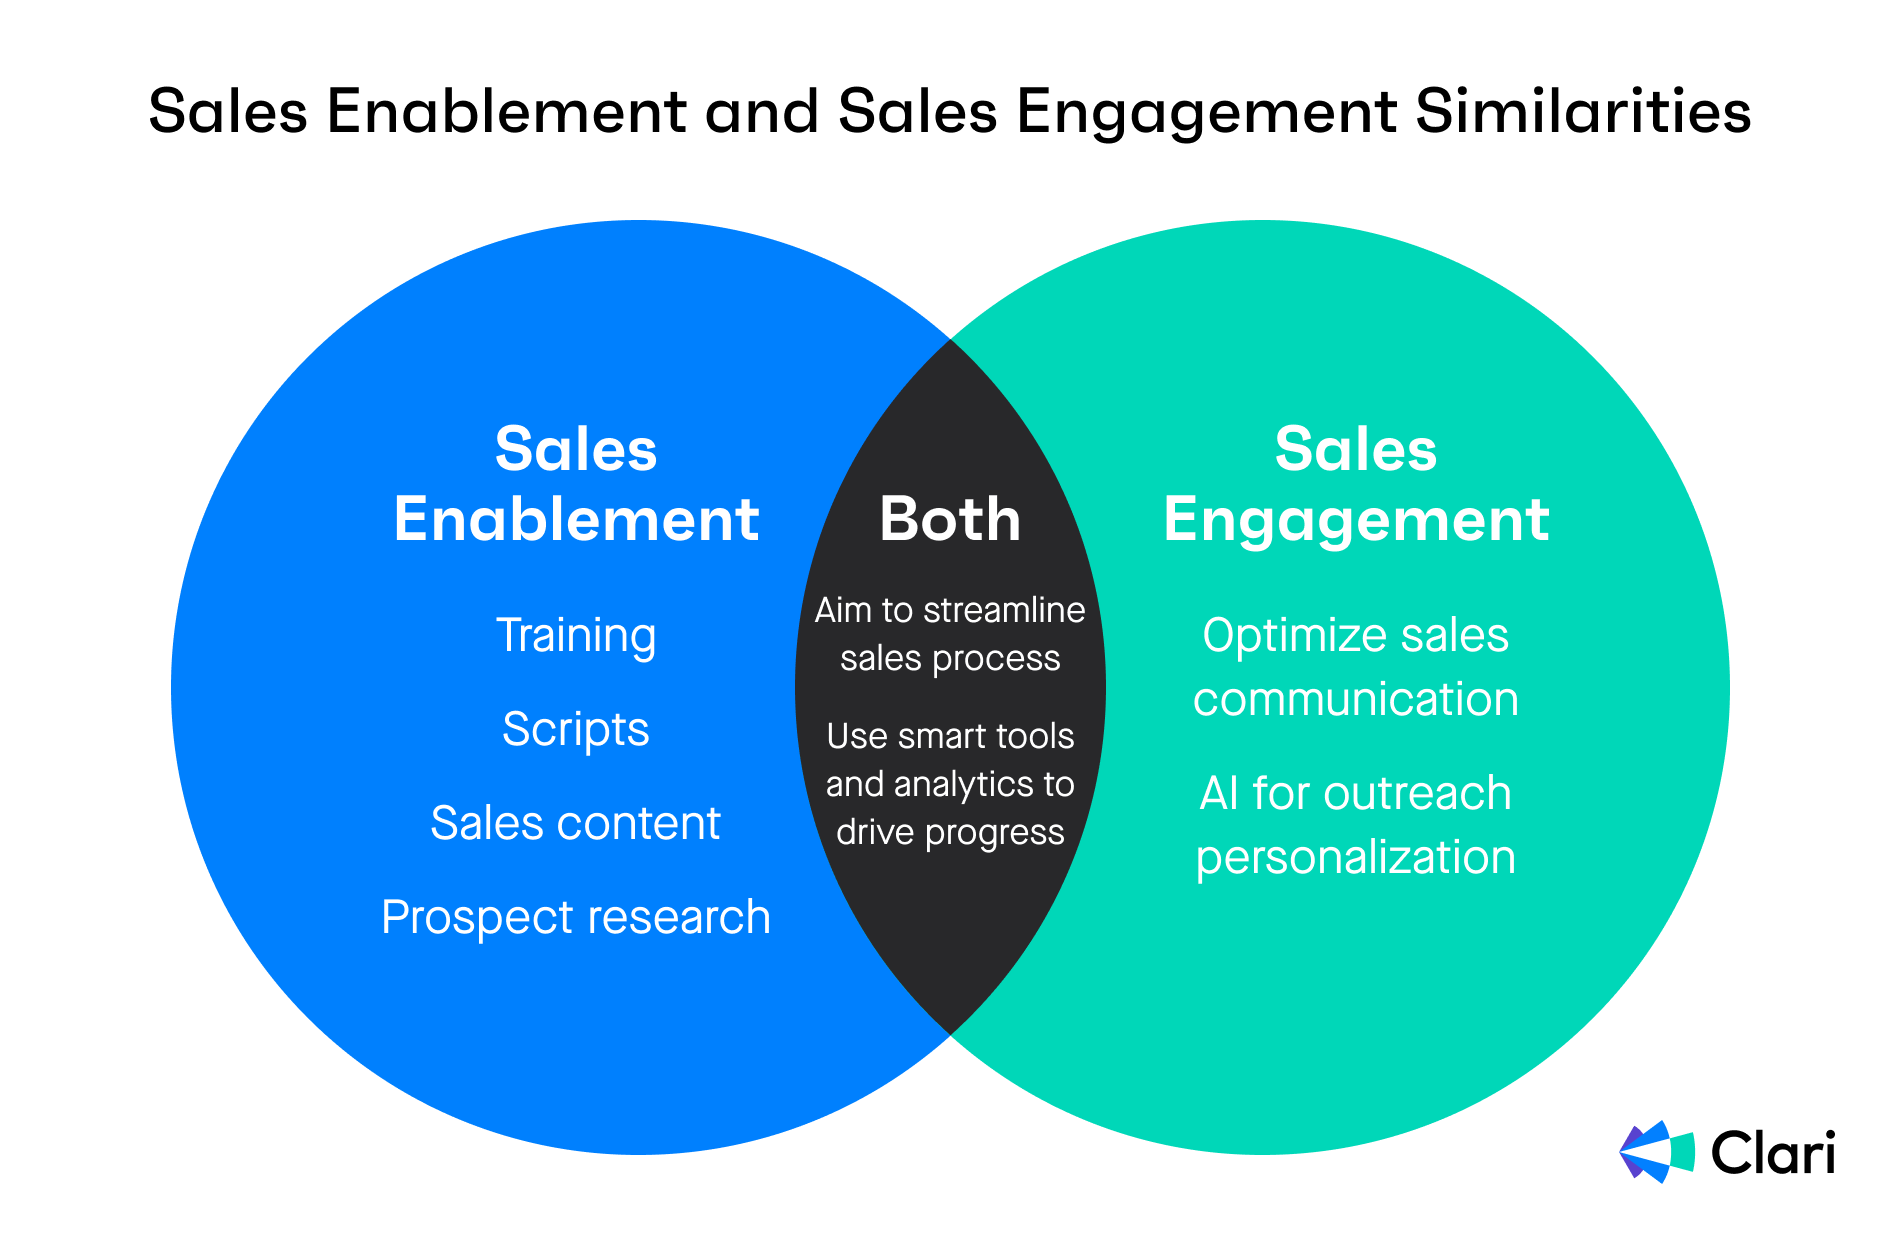 Venn diagram showing similarities between sales enablement and engagement